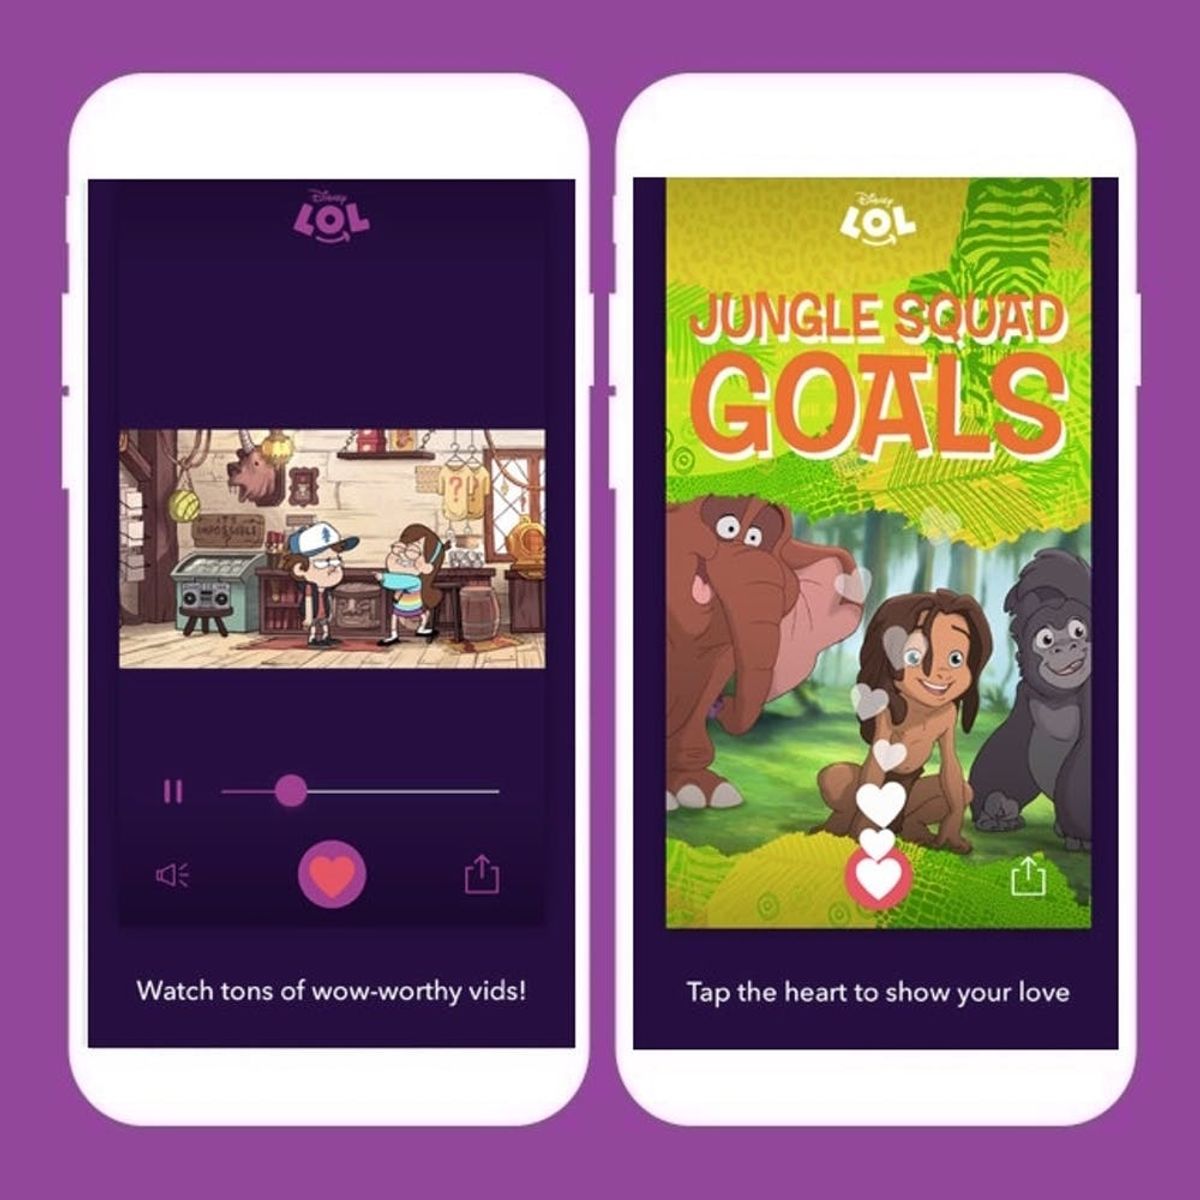 Disney’s LOL App Wants to Make Social Sharing Safe for Kids